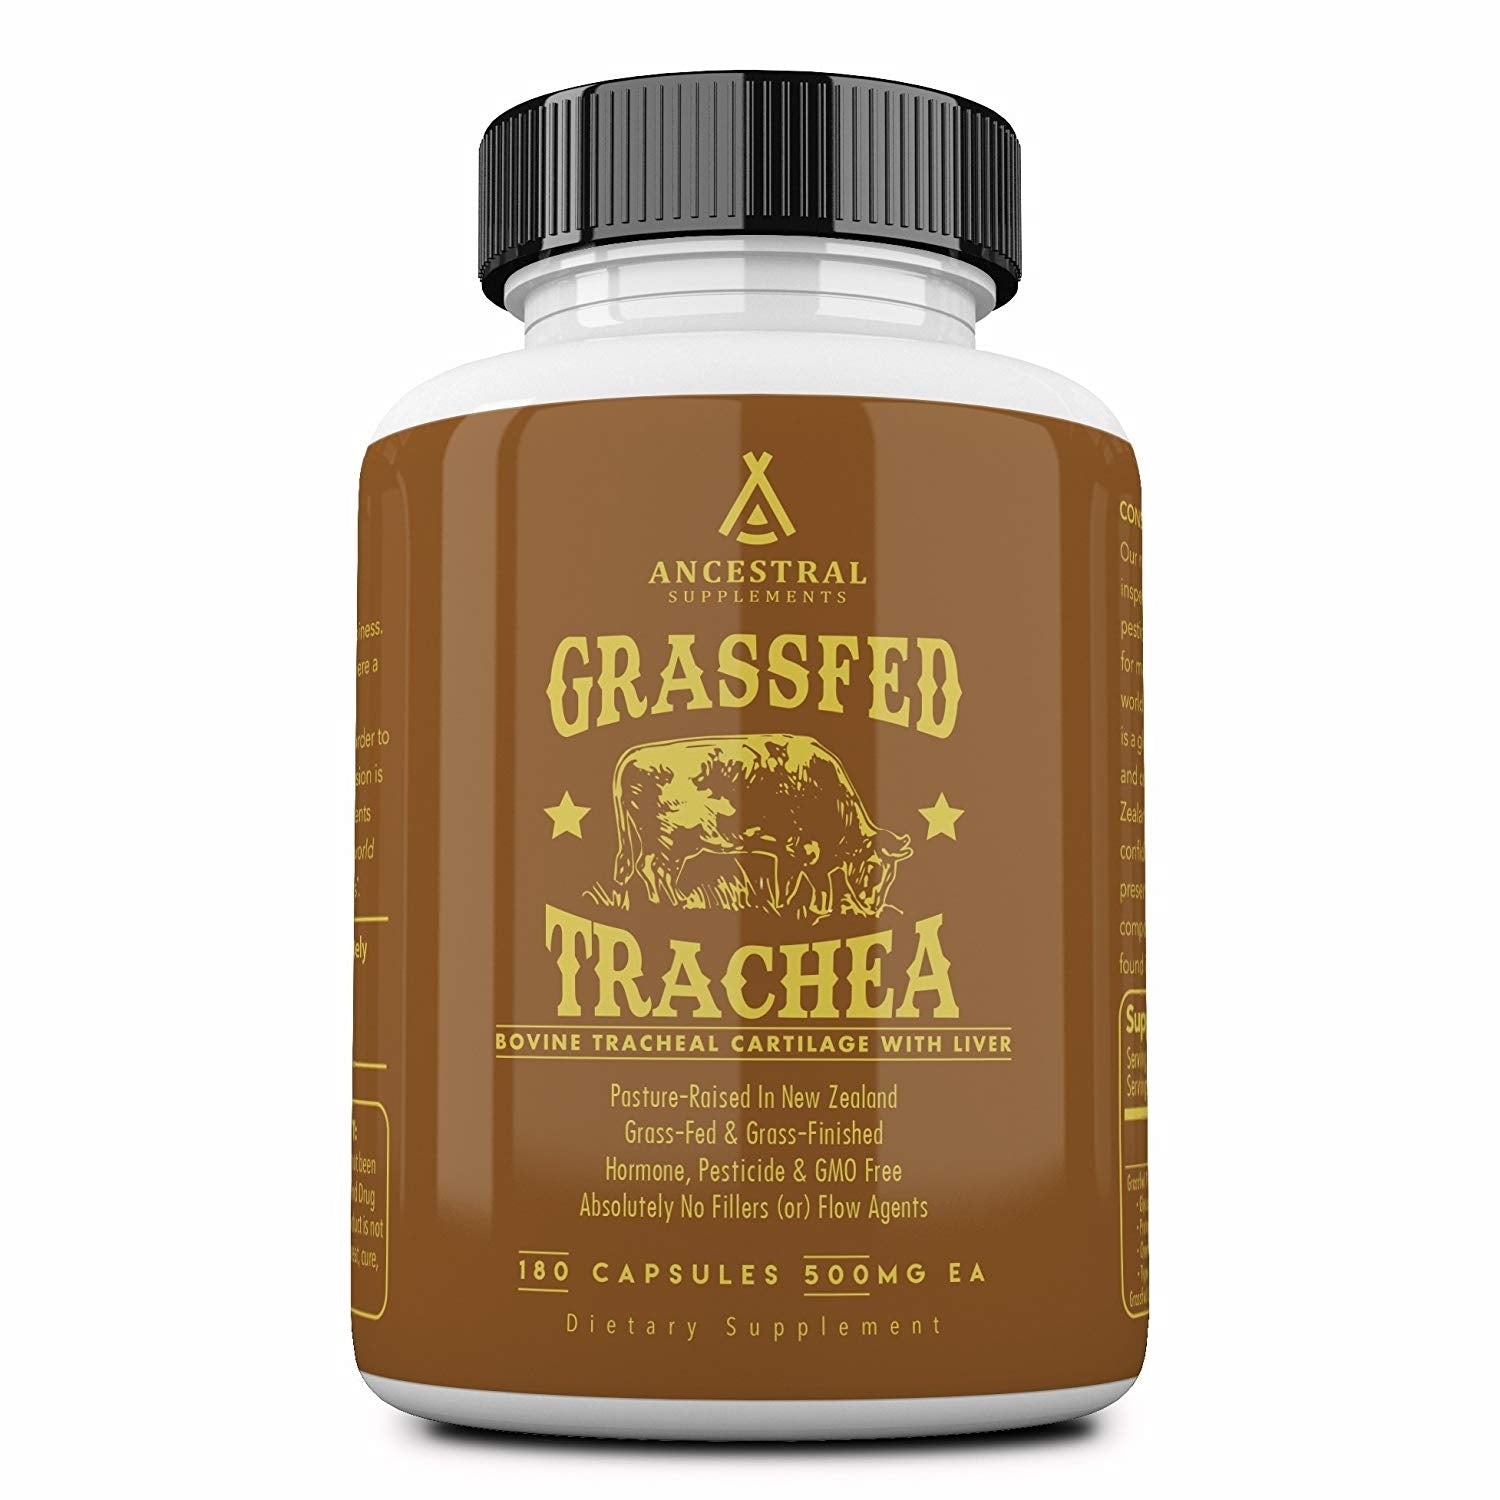 Grassfed Beef Trachea - 180 capsules